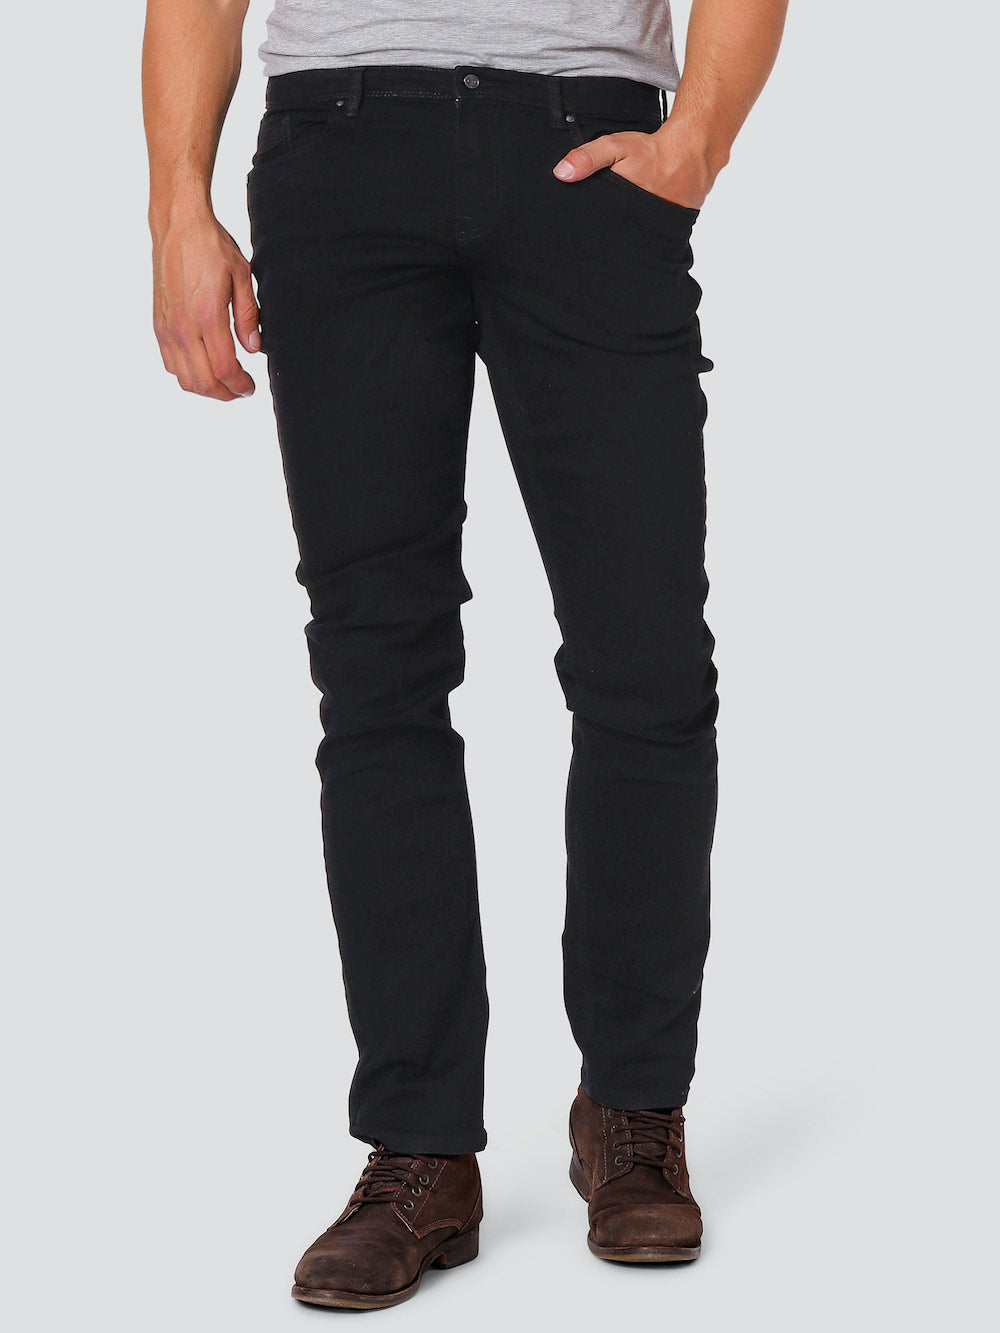 Felix Flex Jeans Regular 2020 - Black Denim